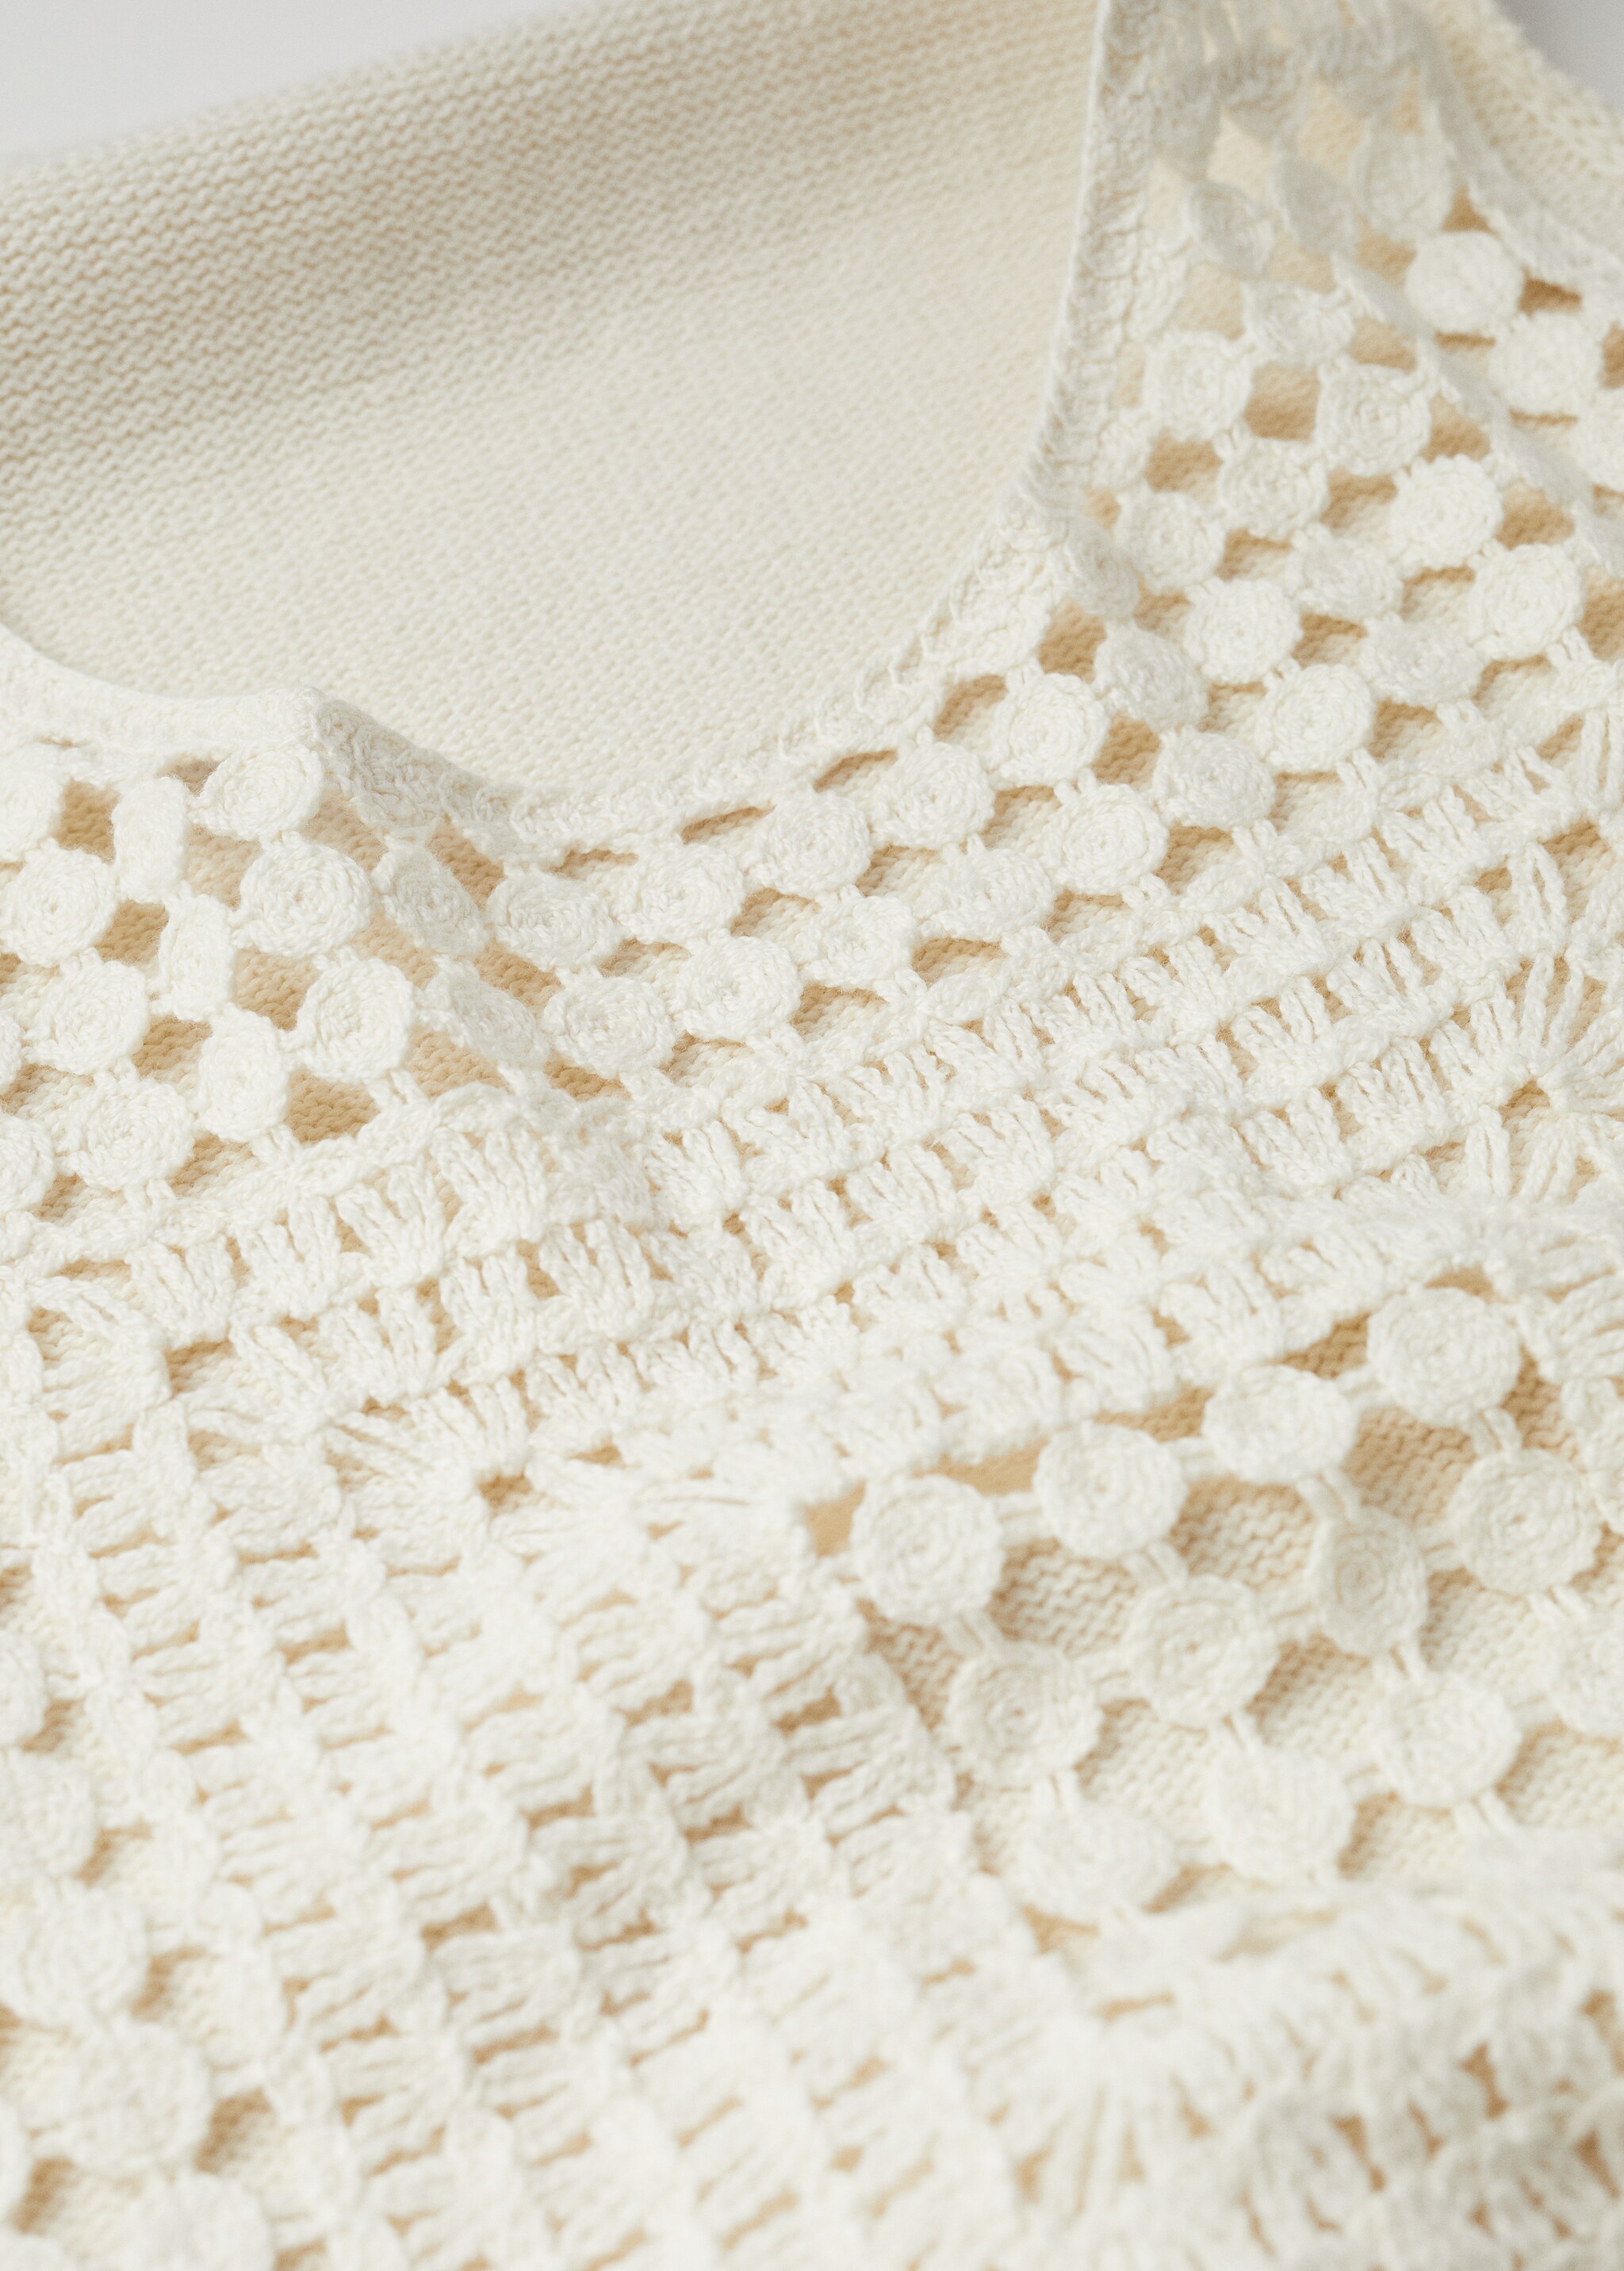 Cotton crochet top - Details of the article 8